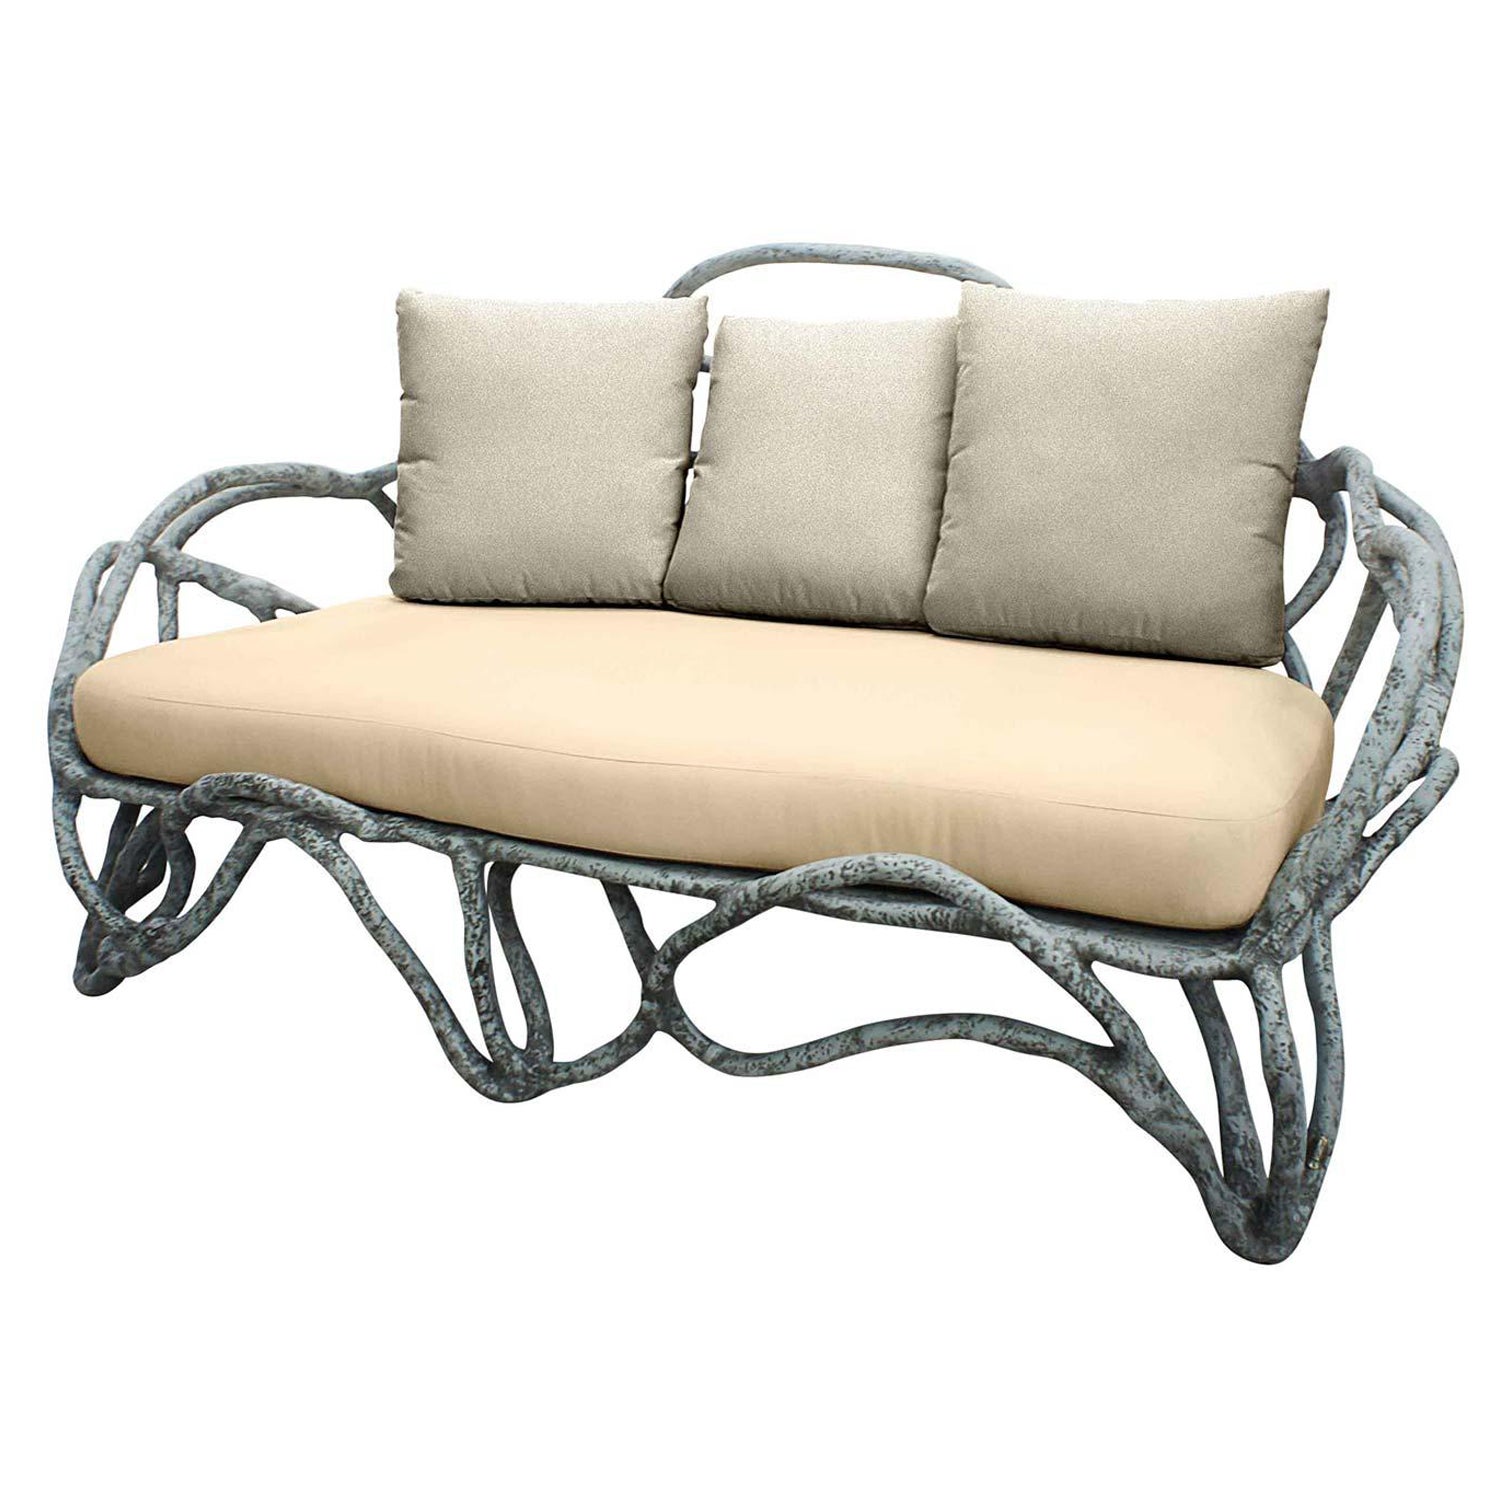 Biomorphic Style Outdoor Sofa in Antique Finish